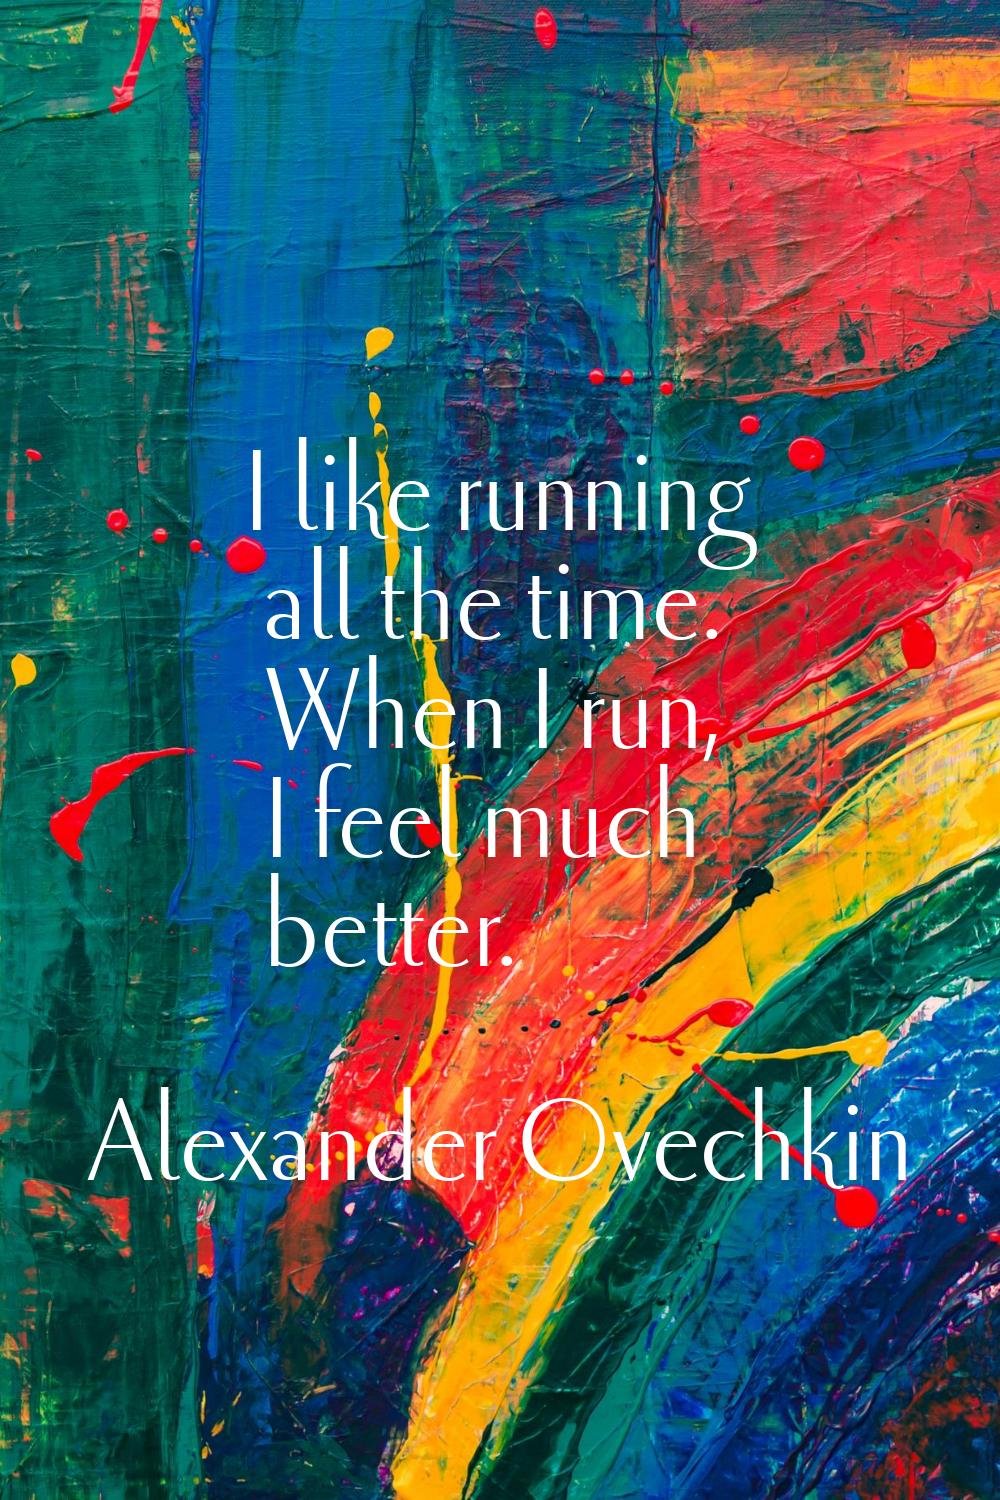 I like running all the time. When I run, I feel much better.